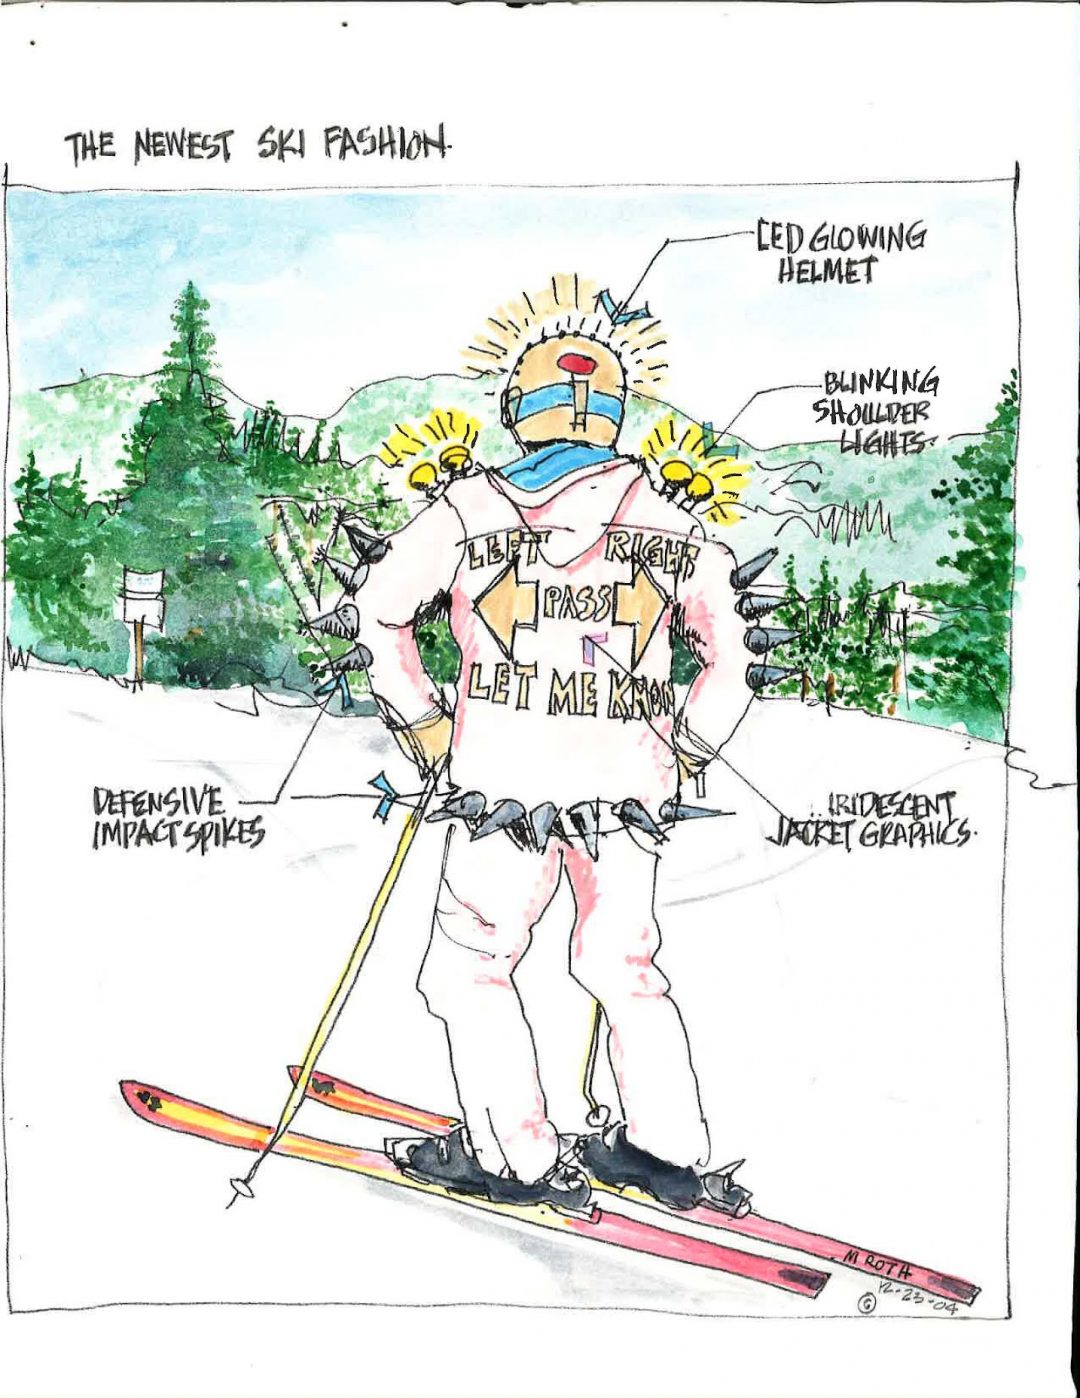 Ageing Skiing Concerns – AKA, Skiing on the Edge